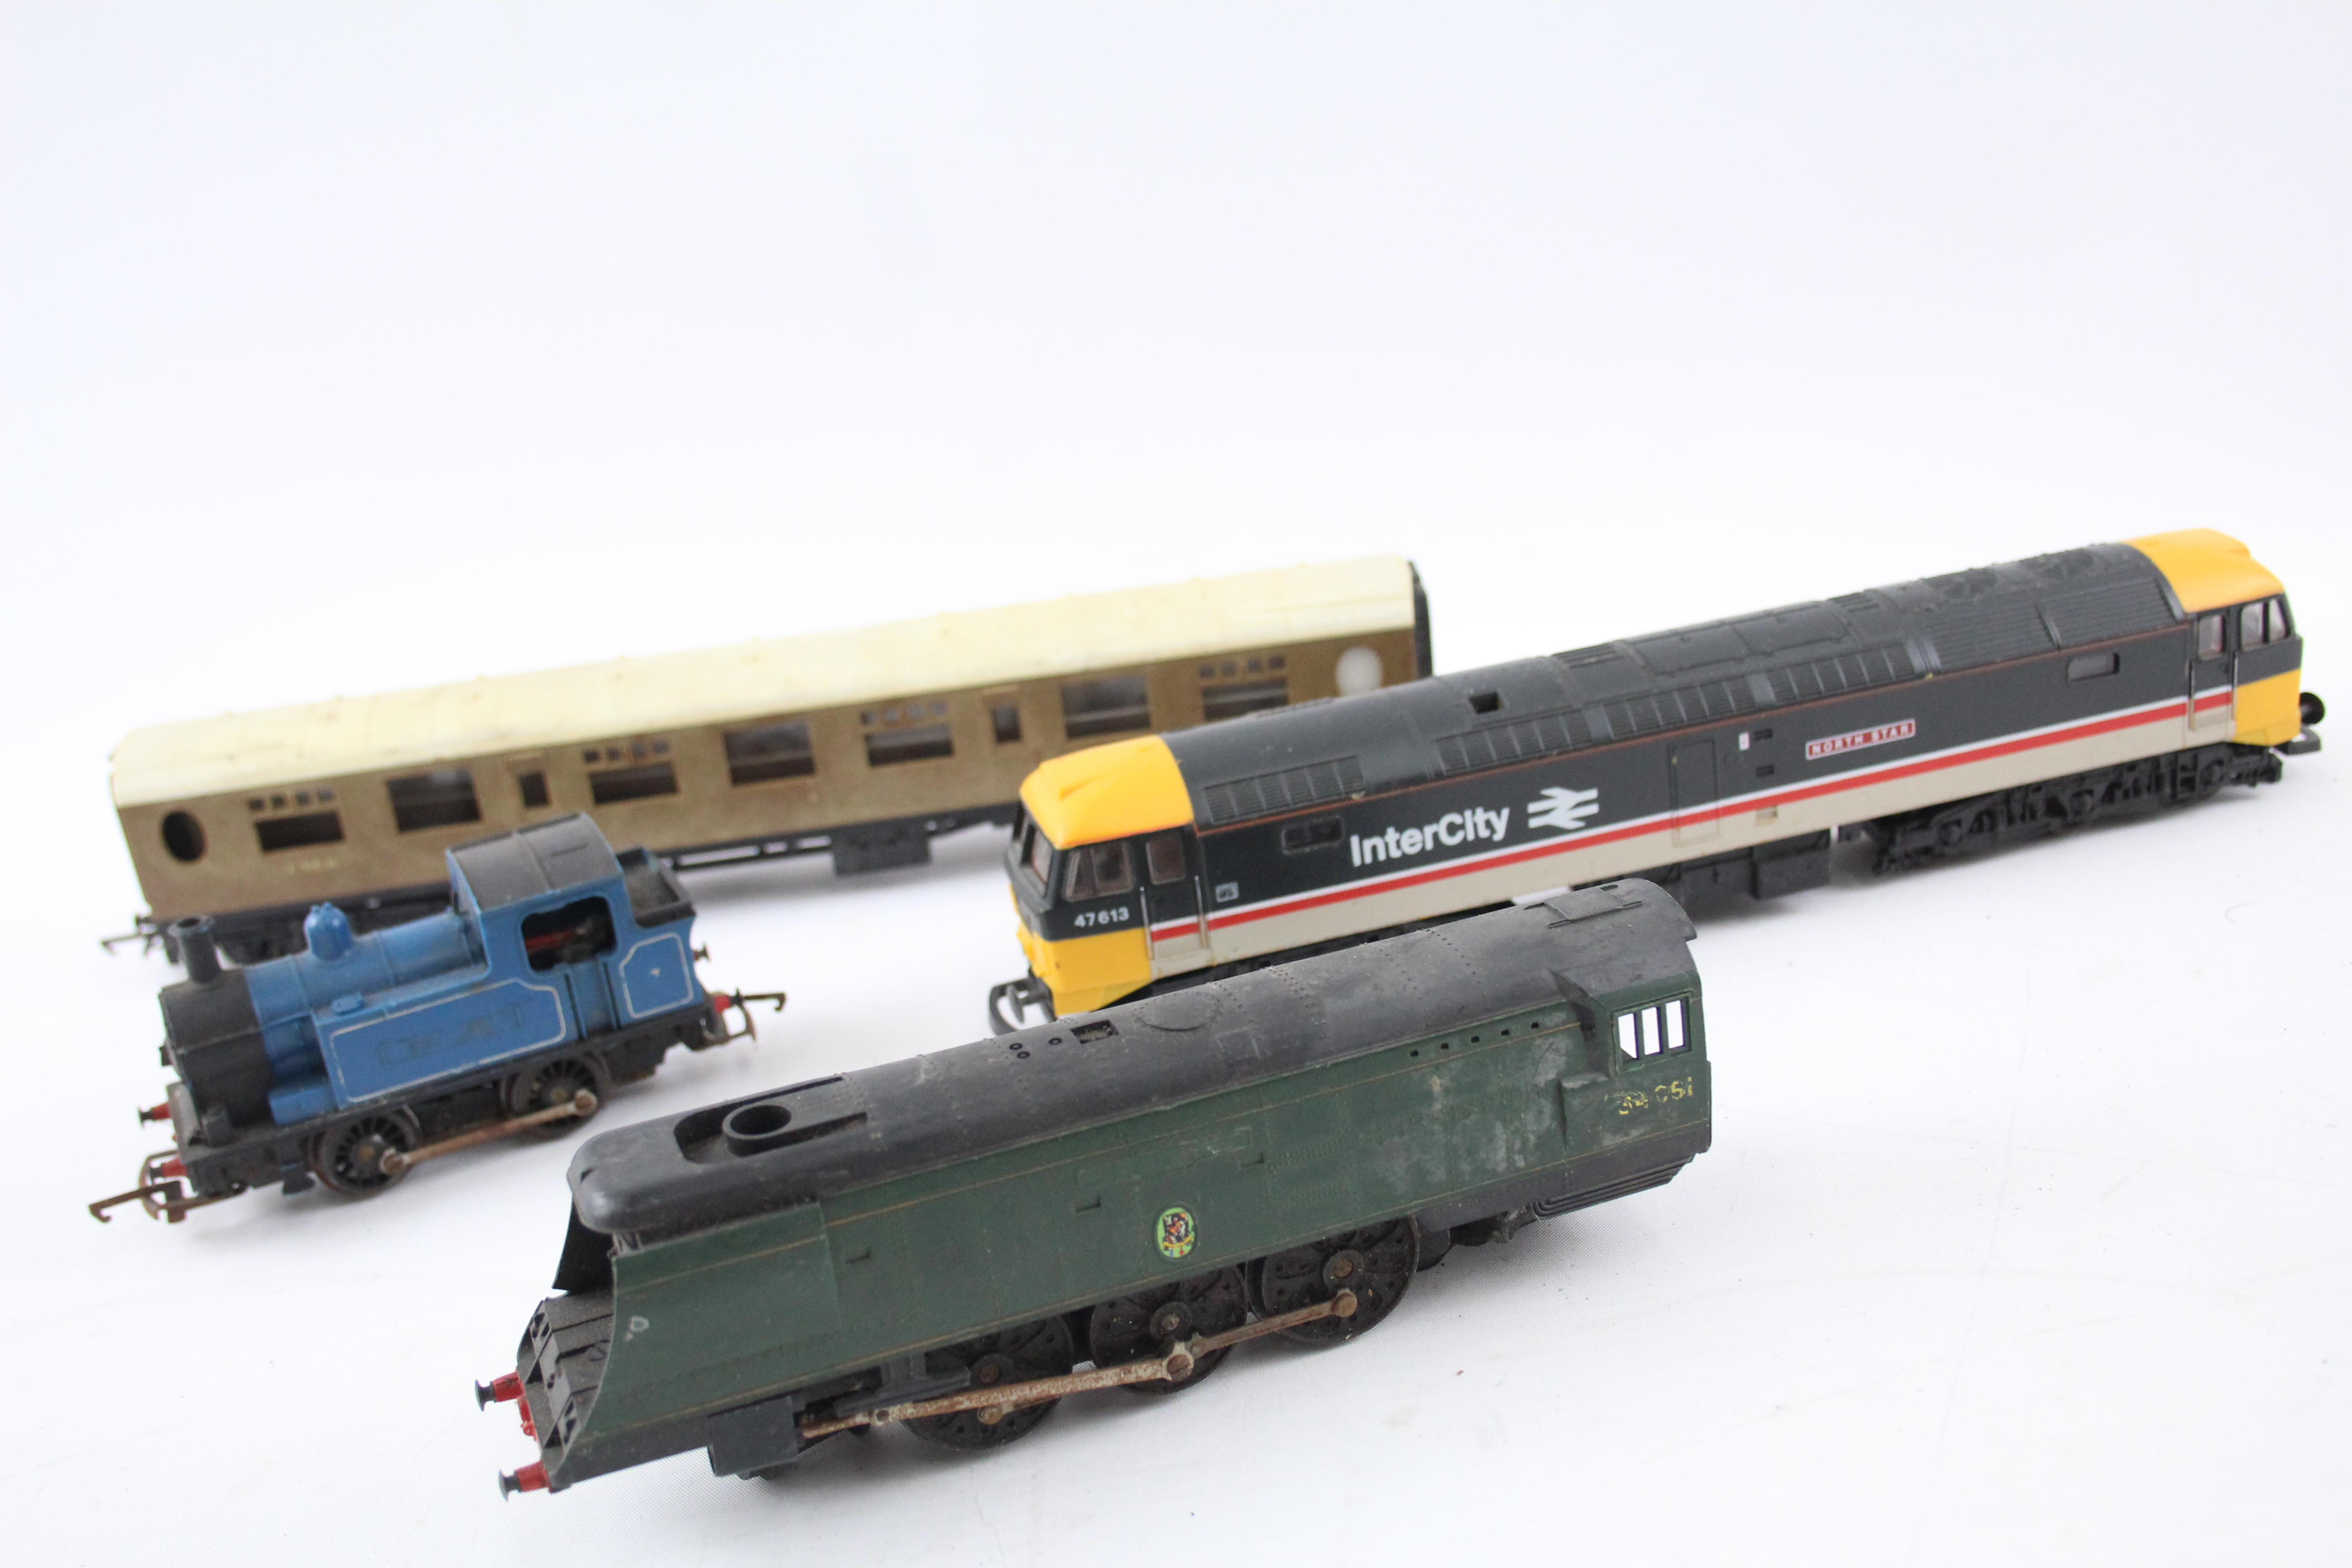 8 x OO Gauge Model Railways Inc Locomotives Inter City, Triang, Hornby Etc 681563 - Image 4 of 4